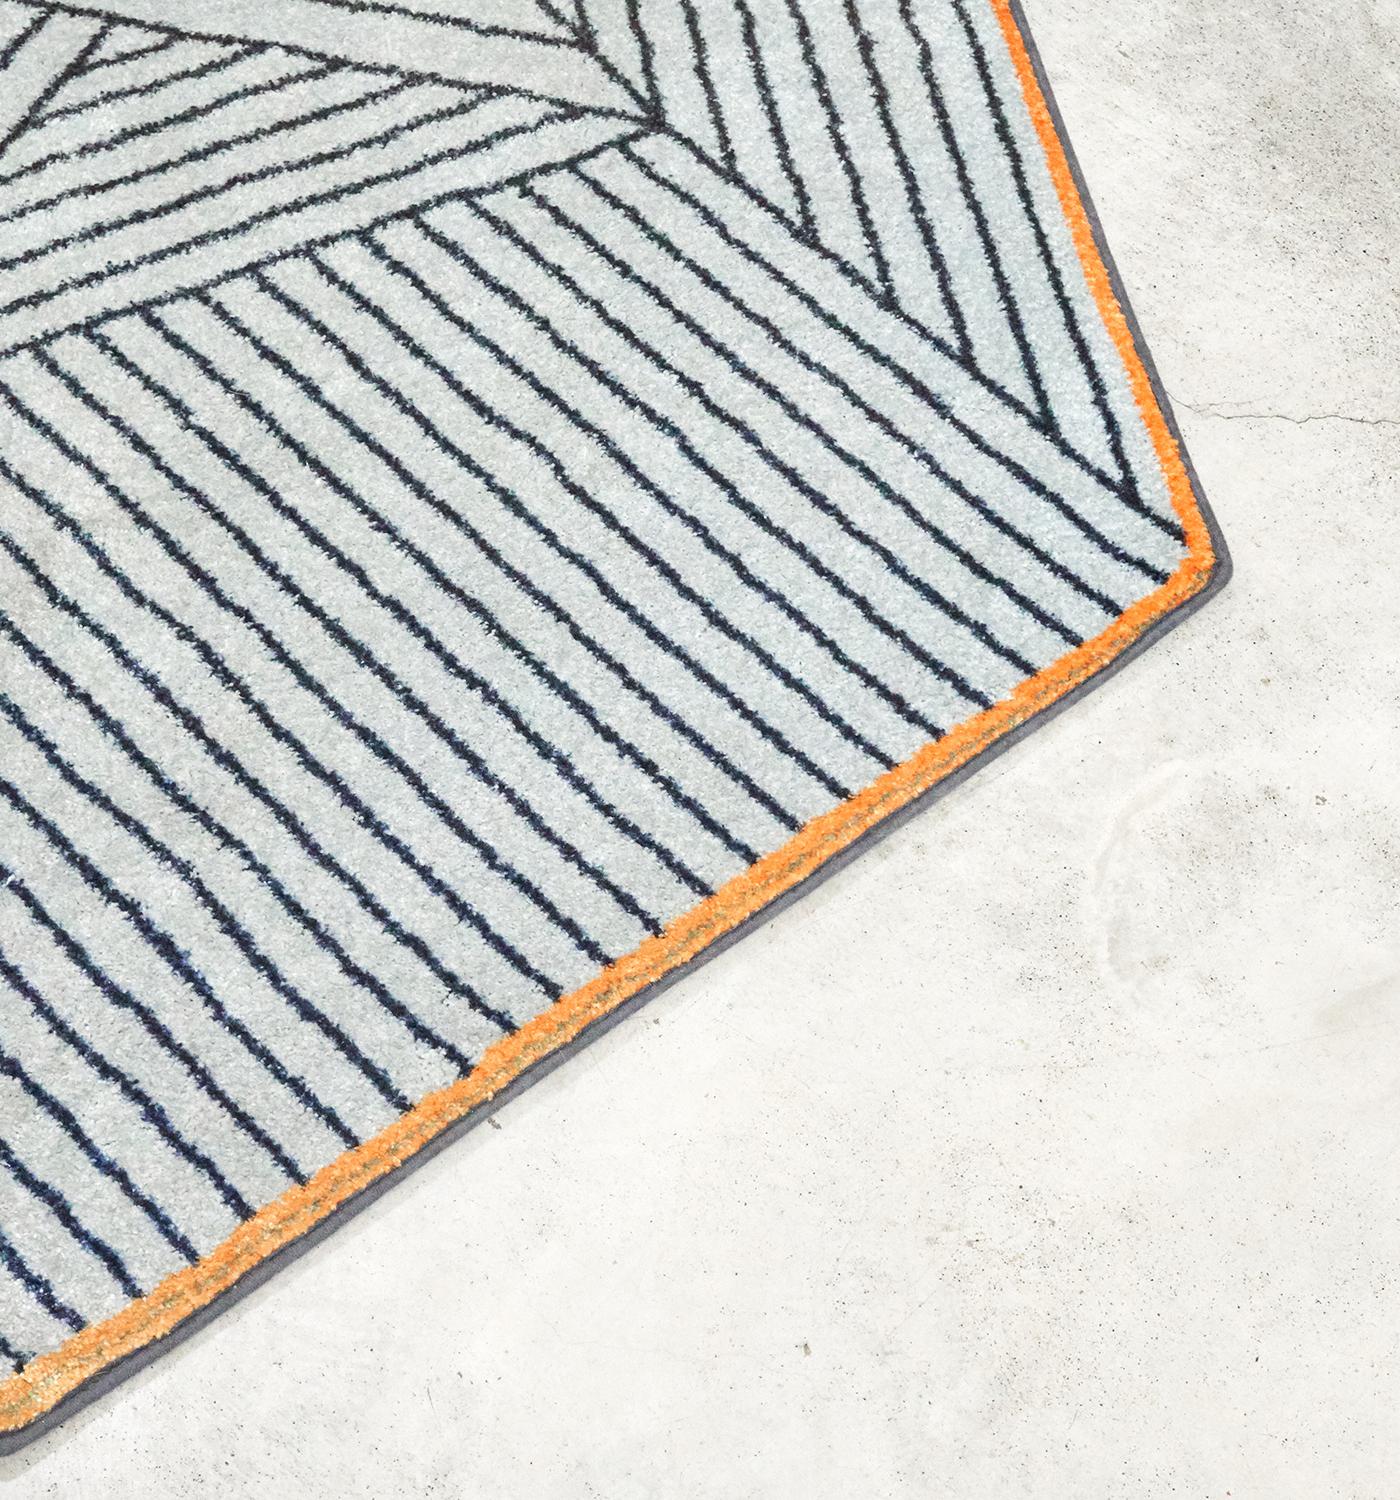 Al Tappeto Carpet Contemporary Rug by enrico girotti In New Condition For Sale In Verona, IT